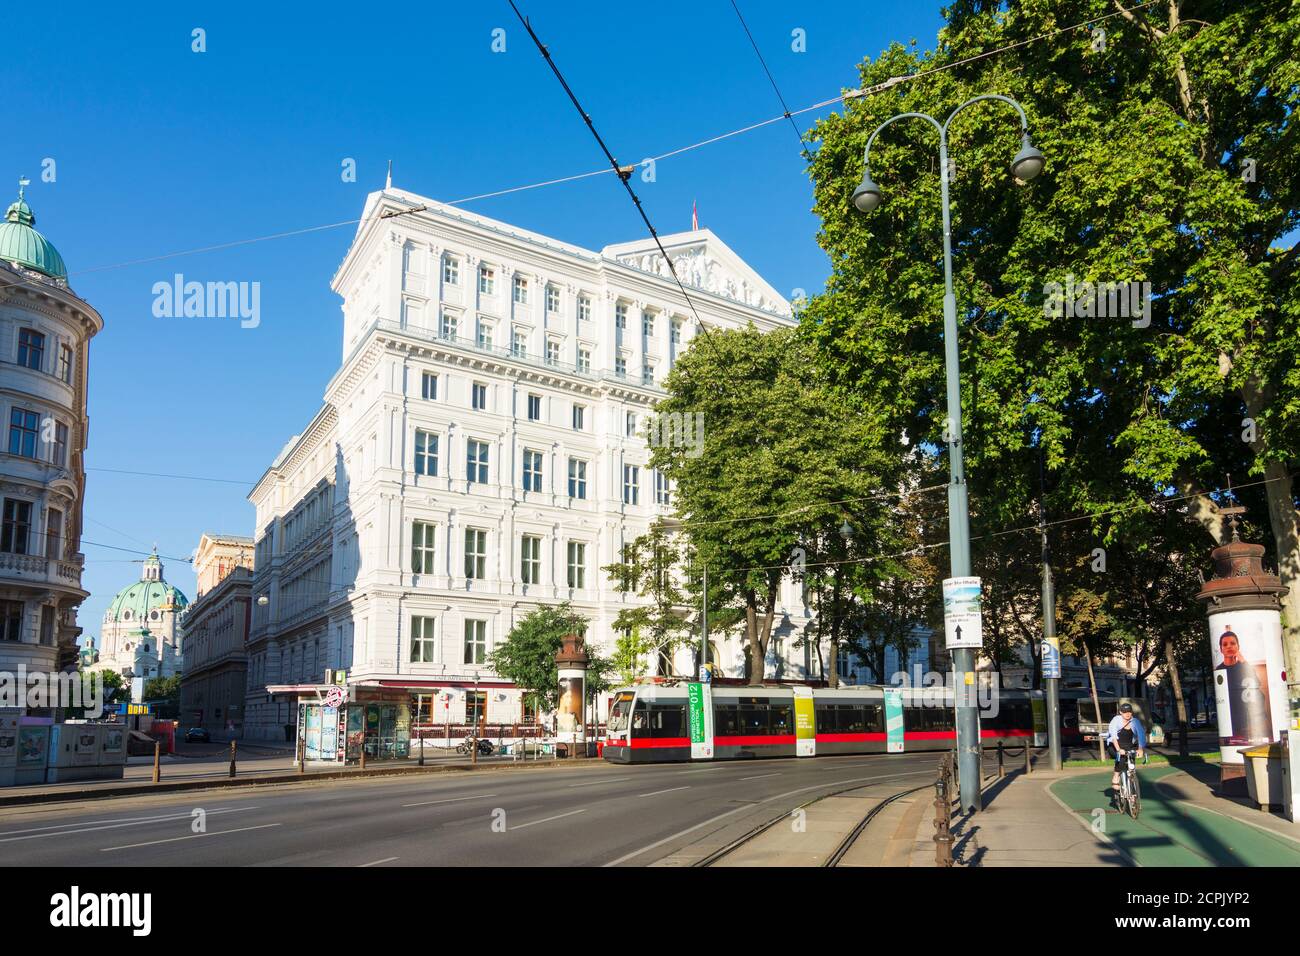 Wien / Vienna, road Kärntner Ring, hotel Imperial, church Karlskirche in 01. Old Town, Austria Stock Photo